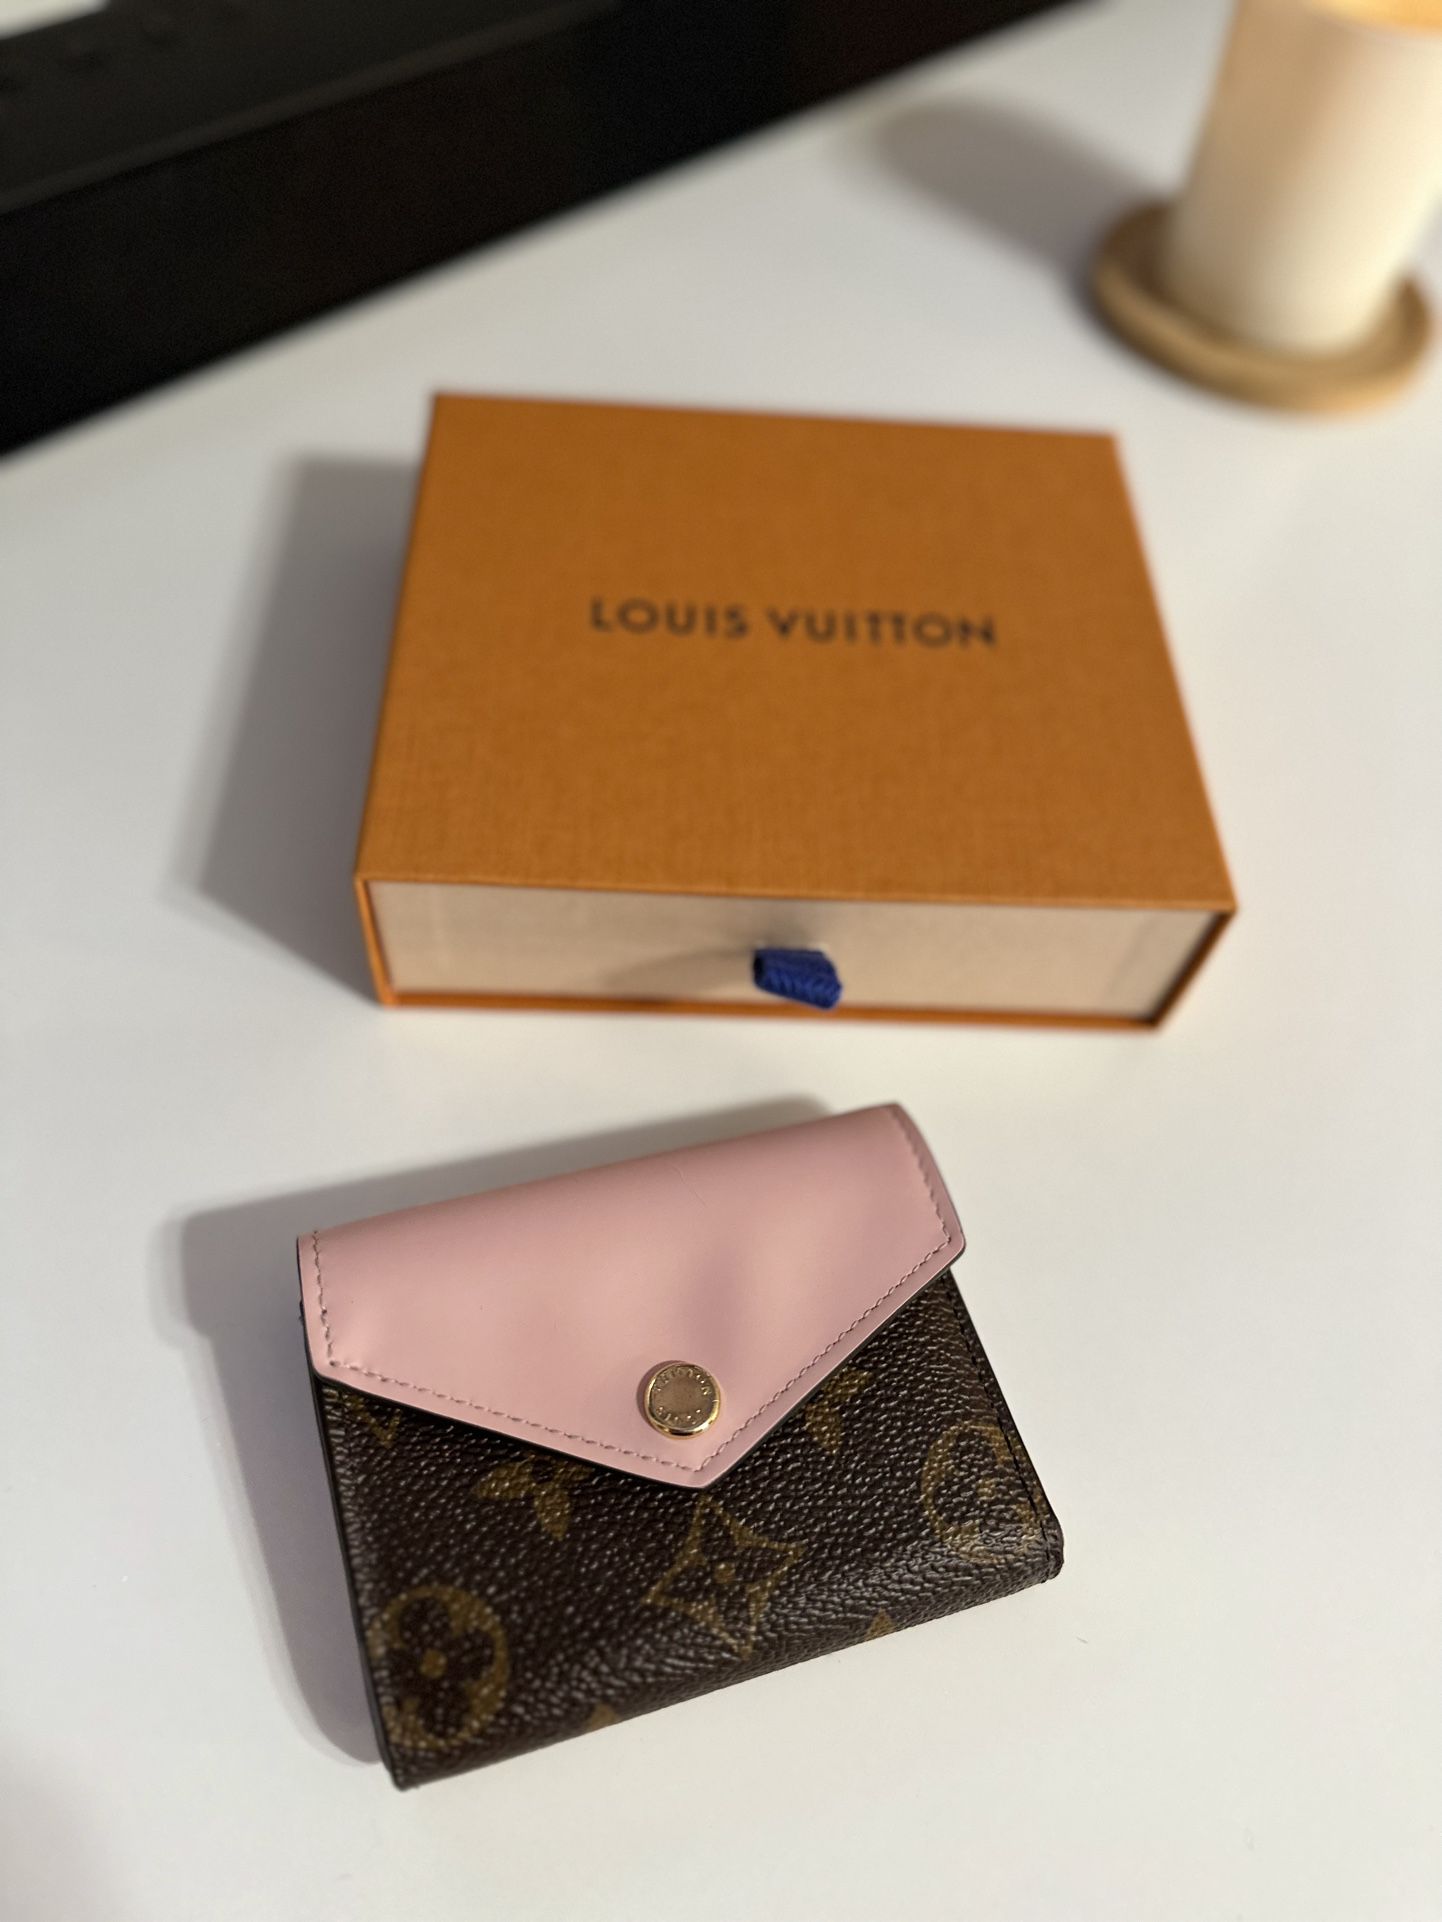 Louis Vuitton Zoe Wallet for Sale in Huntington Beach, CA - OfferUp